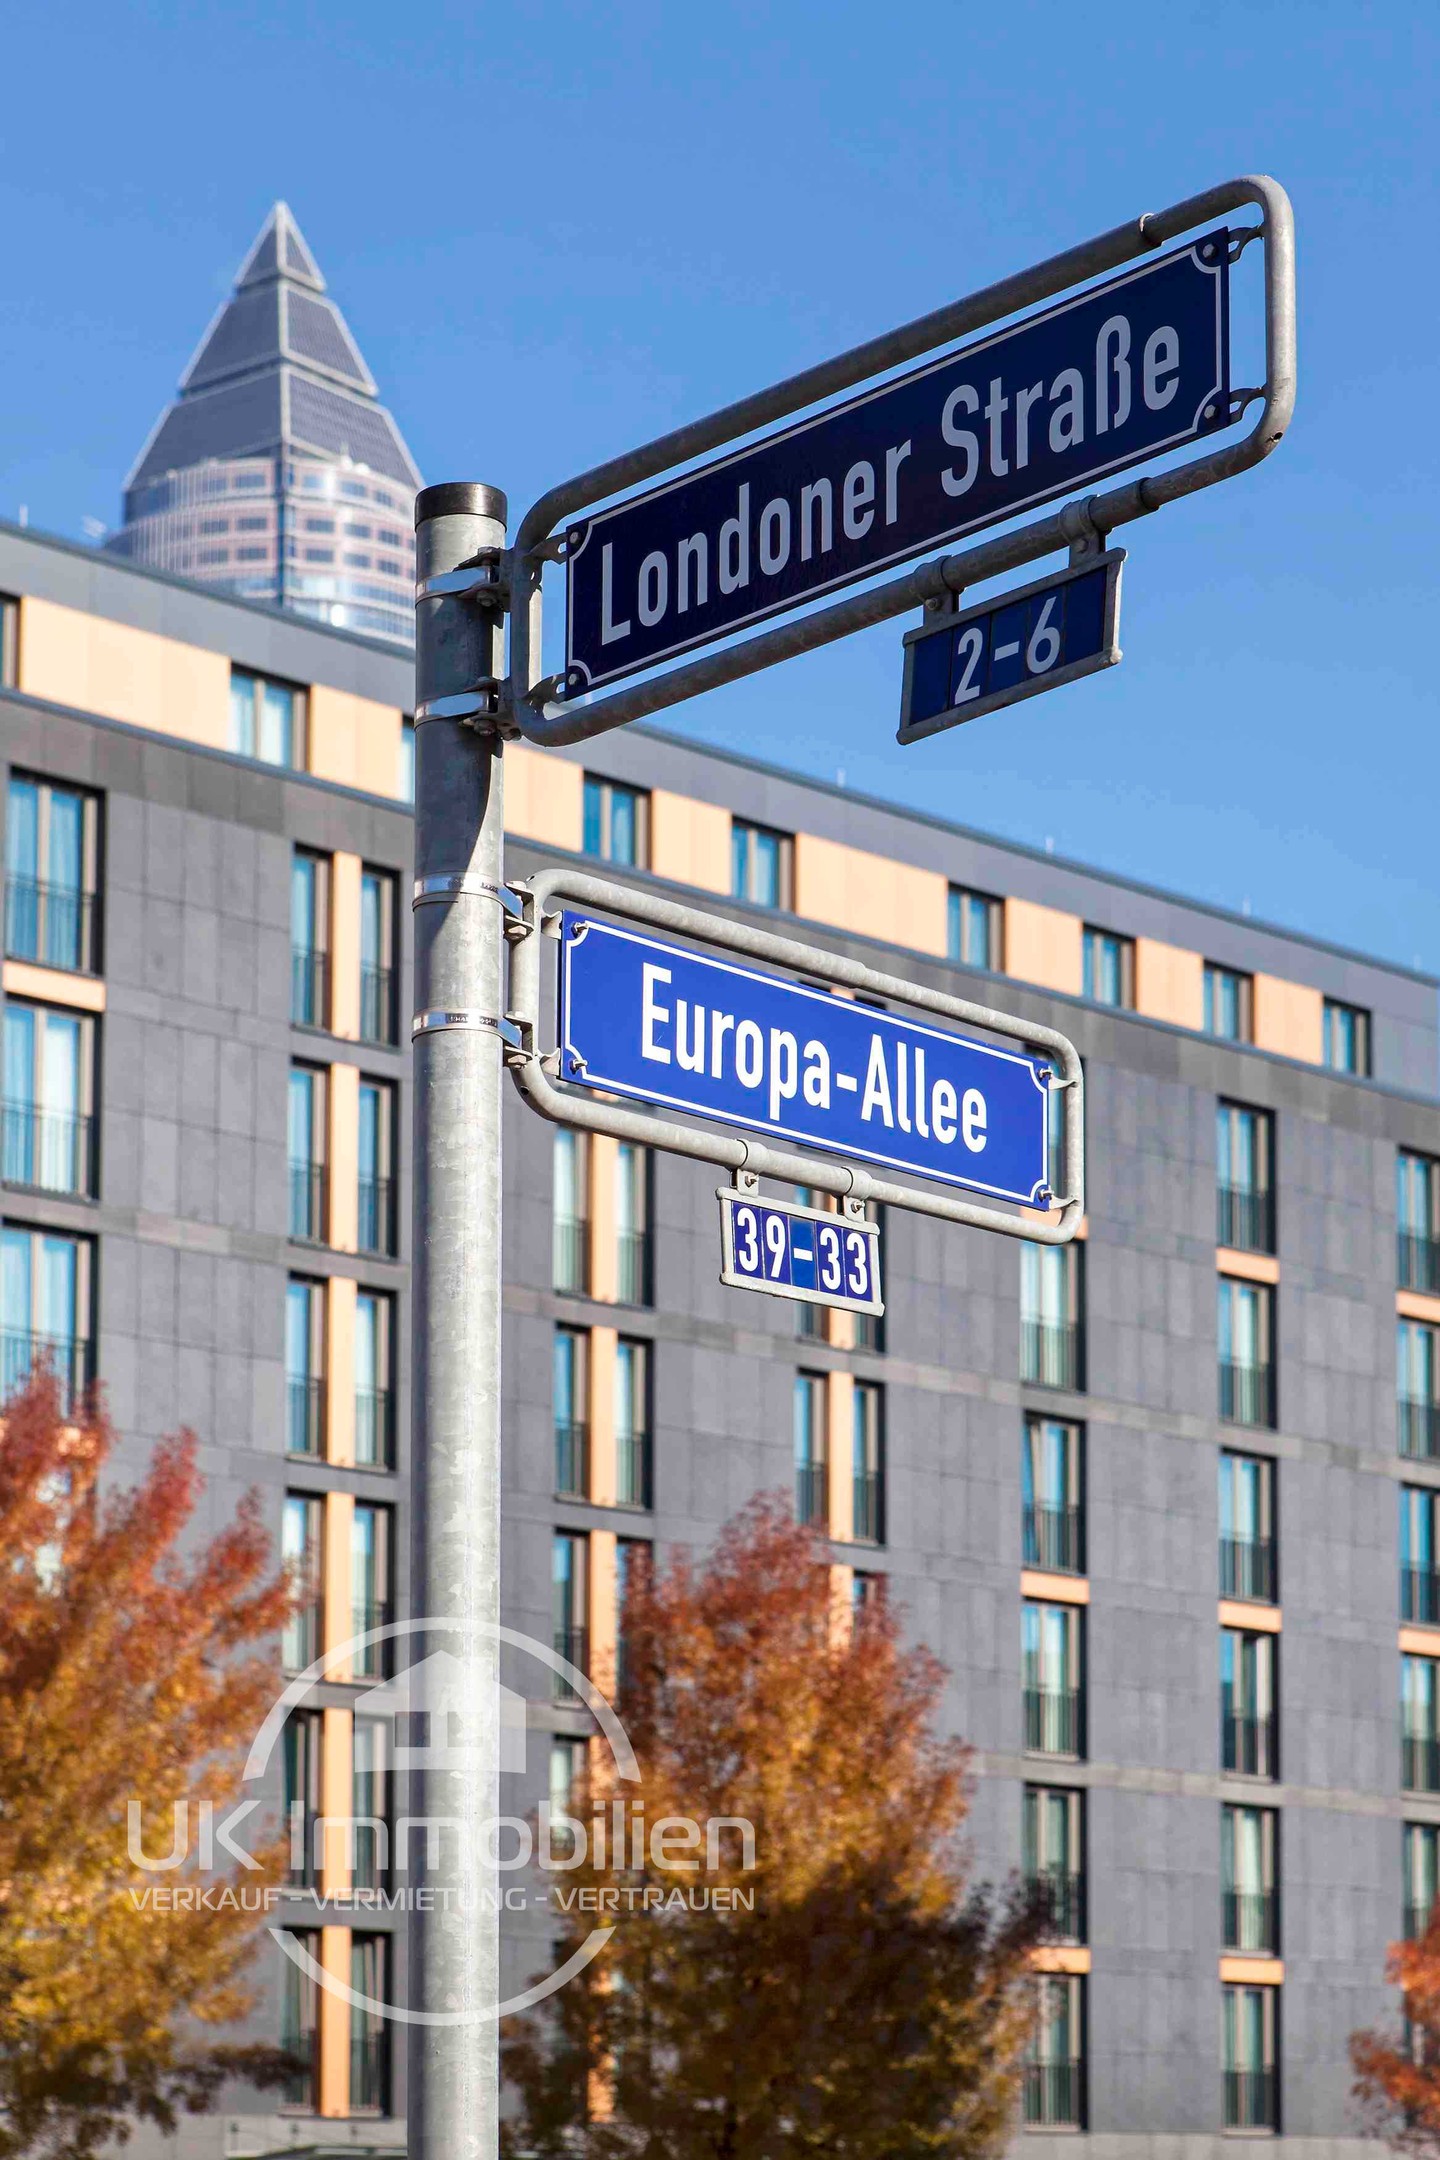 Immobilienmakler-Frankfurt-Europaviertel-LondonerStraße-Europa-Allee.jpg